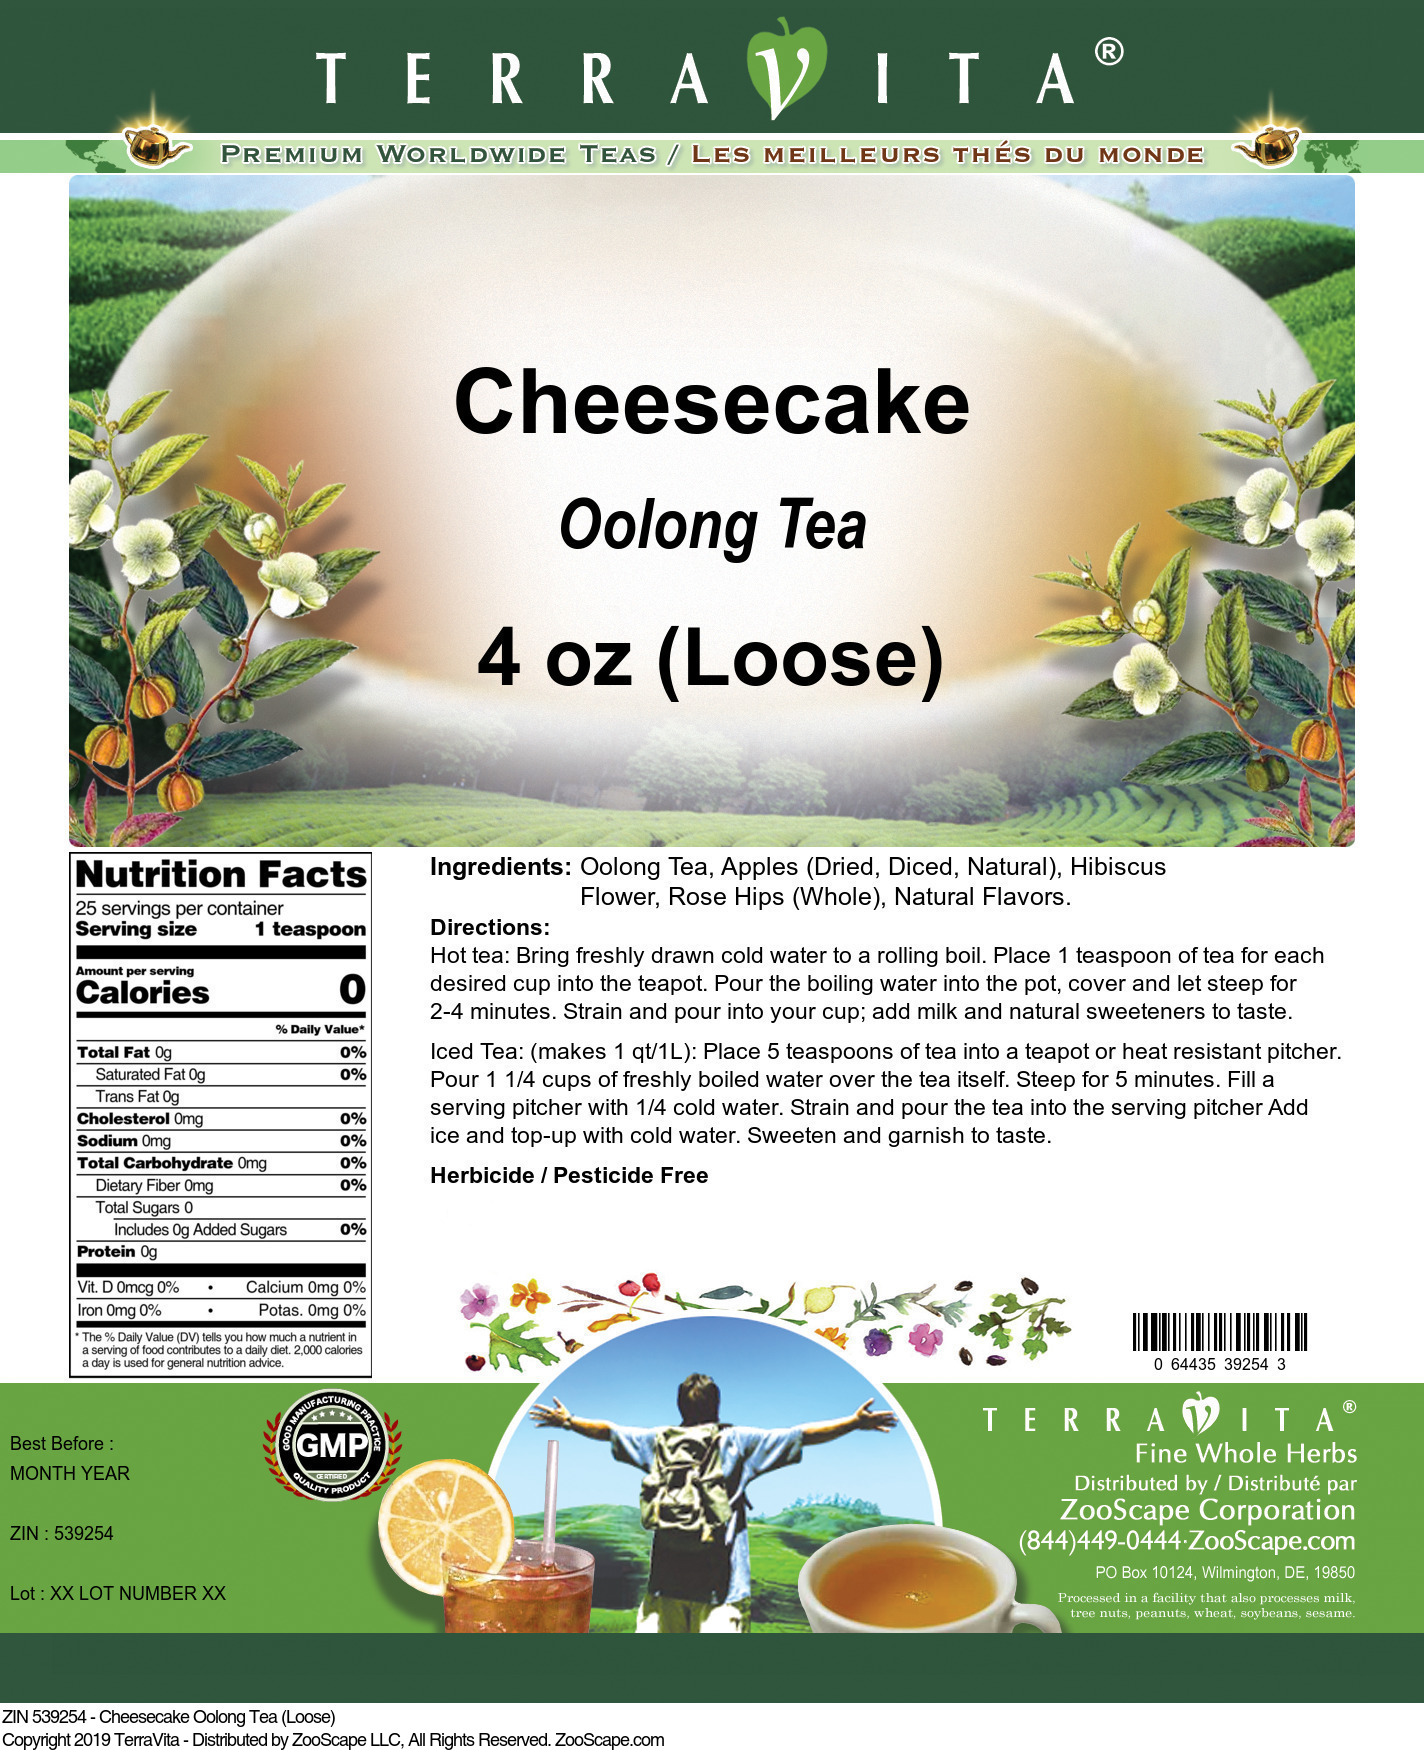 Cheesecake Oolong Tea (Loose) - Label